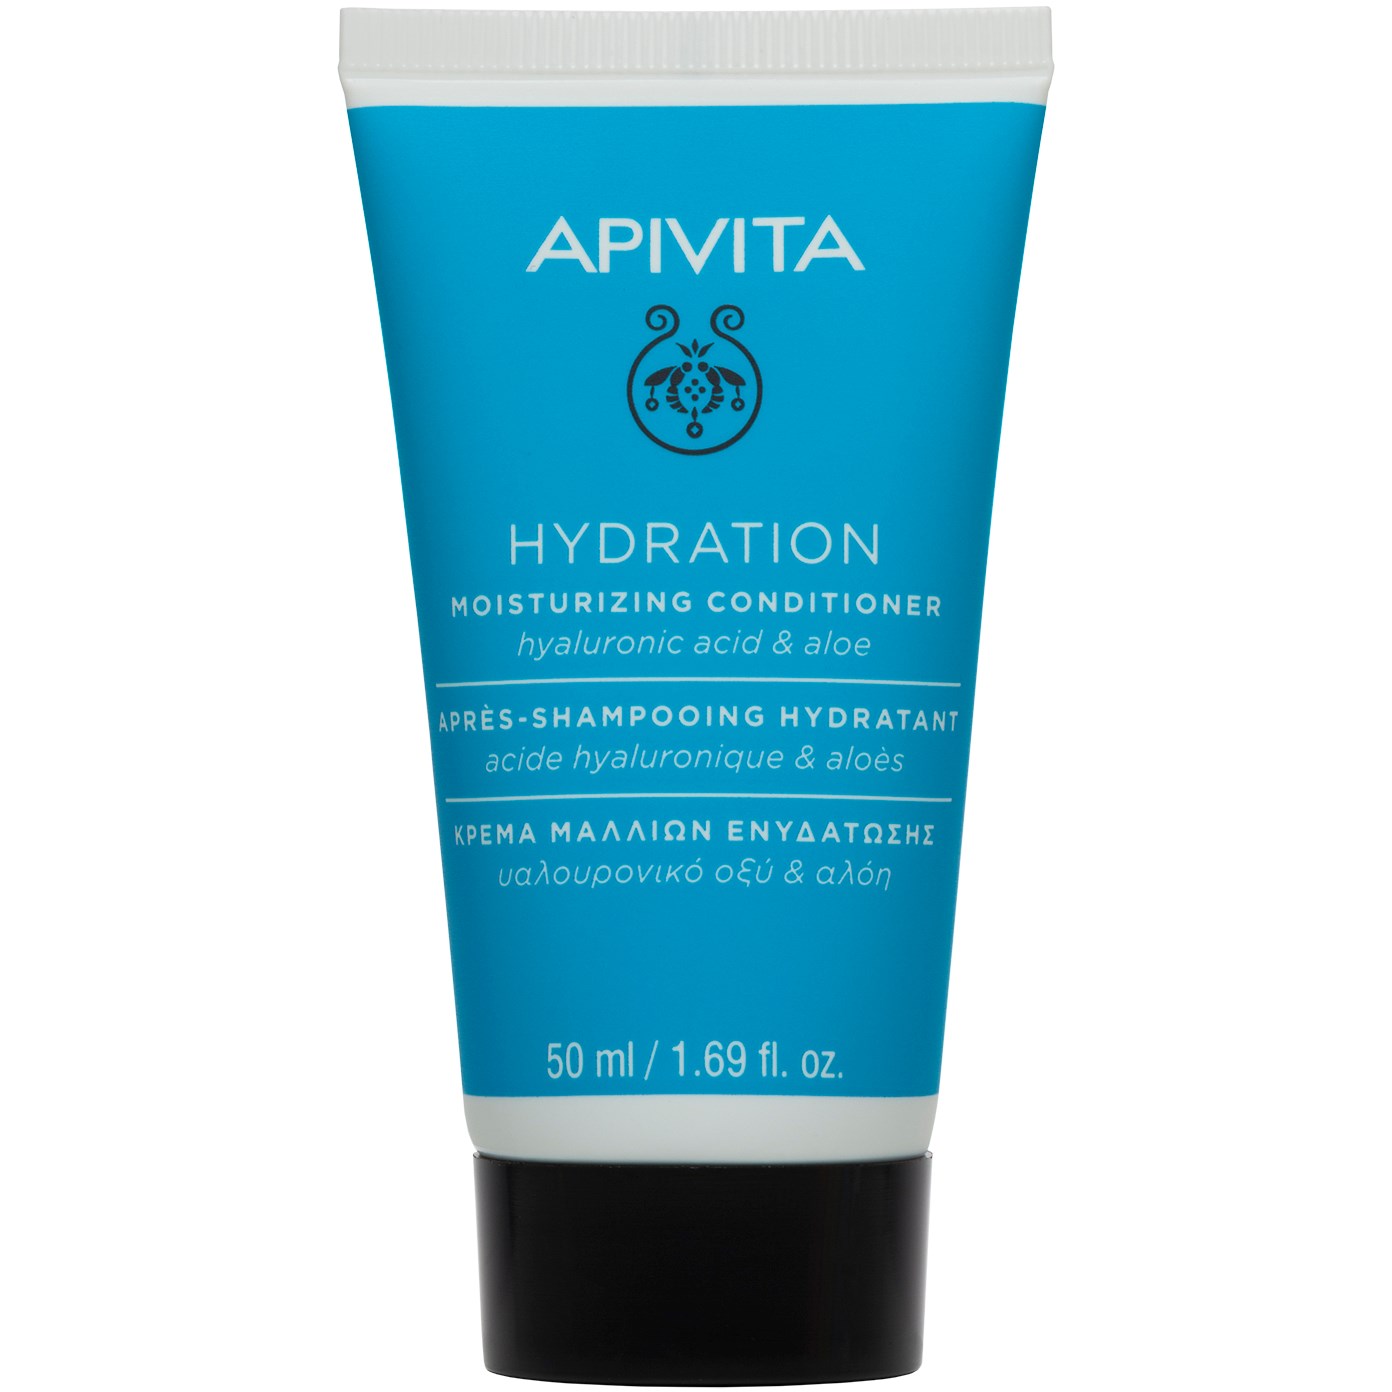 APIVITA Travel Size Moisturizing Conditioner for All Hair Types  50 ml